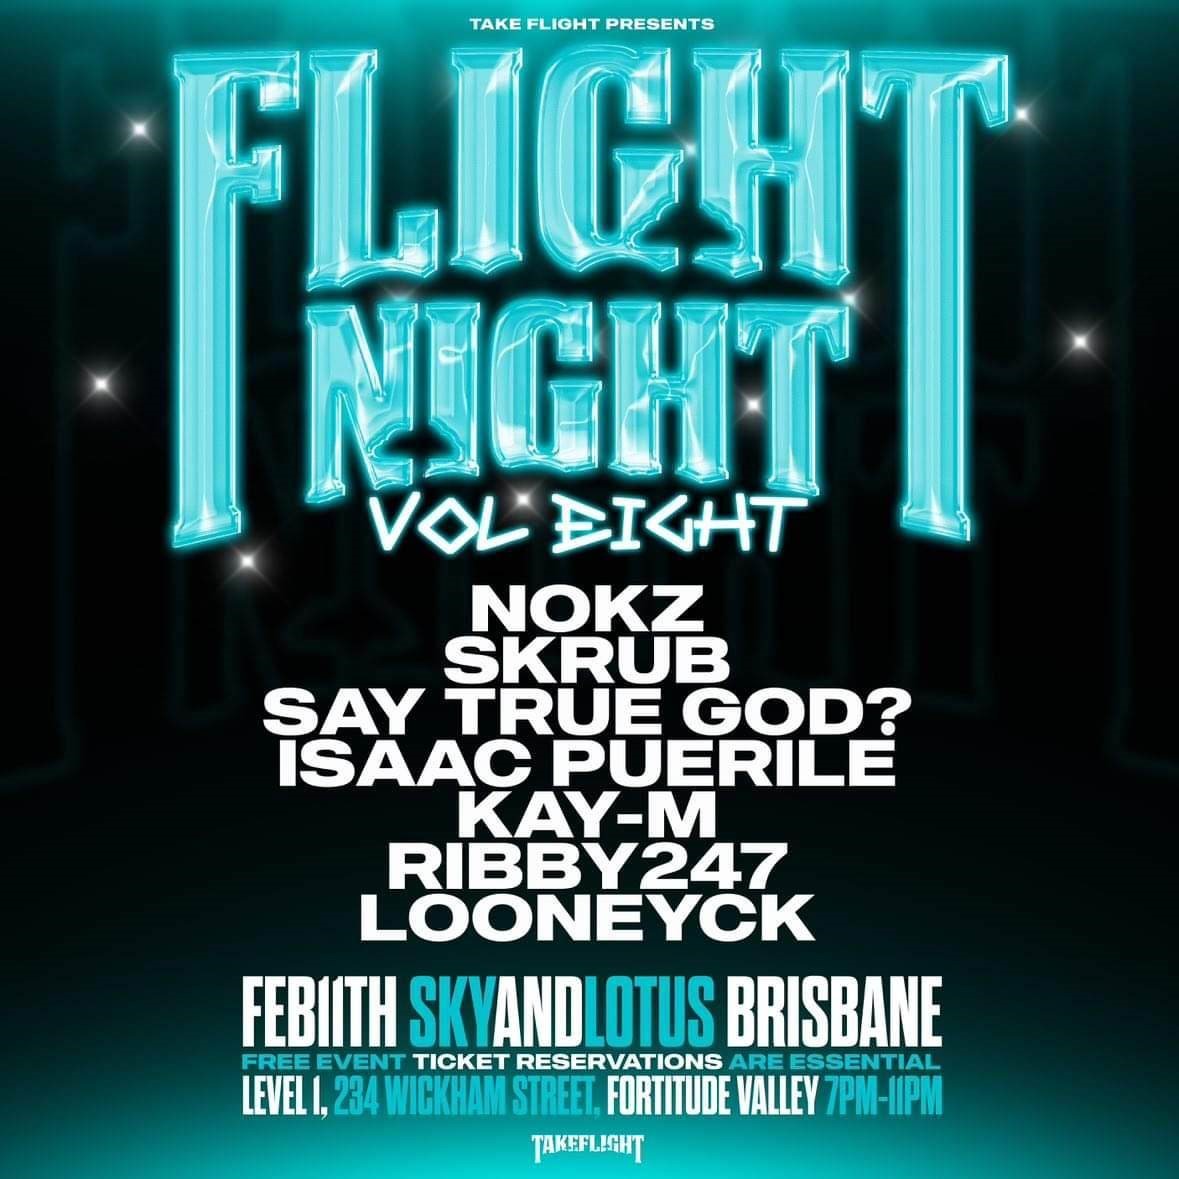 Take Flights Presents - Flight Night Brisbane  on Feb 11, 19:00@Sky And Lotus - Buy tickets and Get information on GOLDBARBNE 